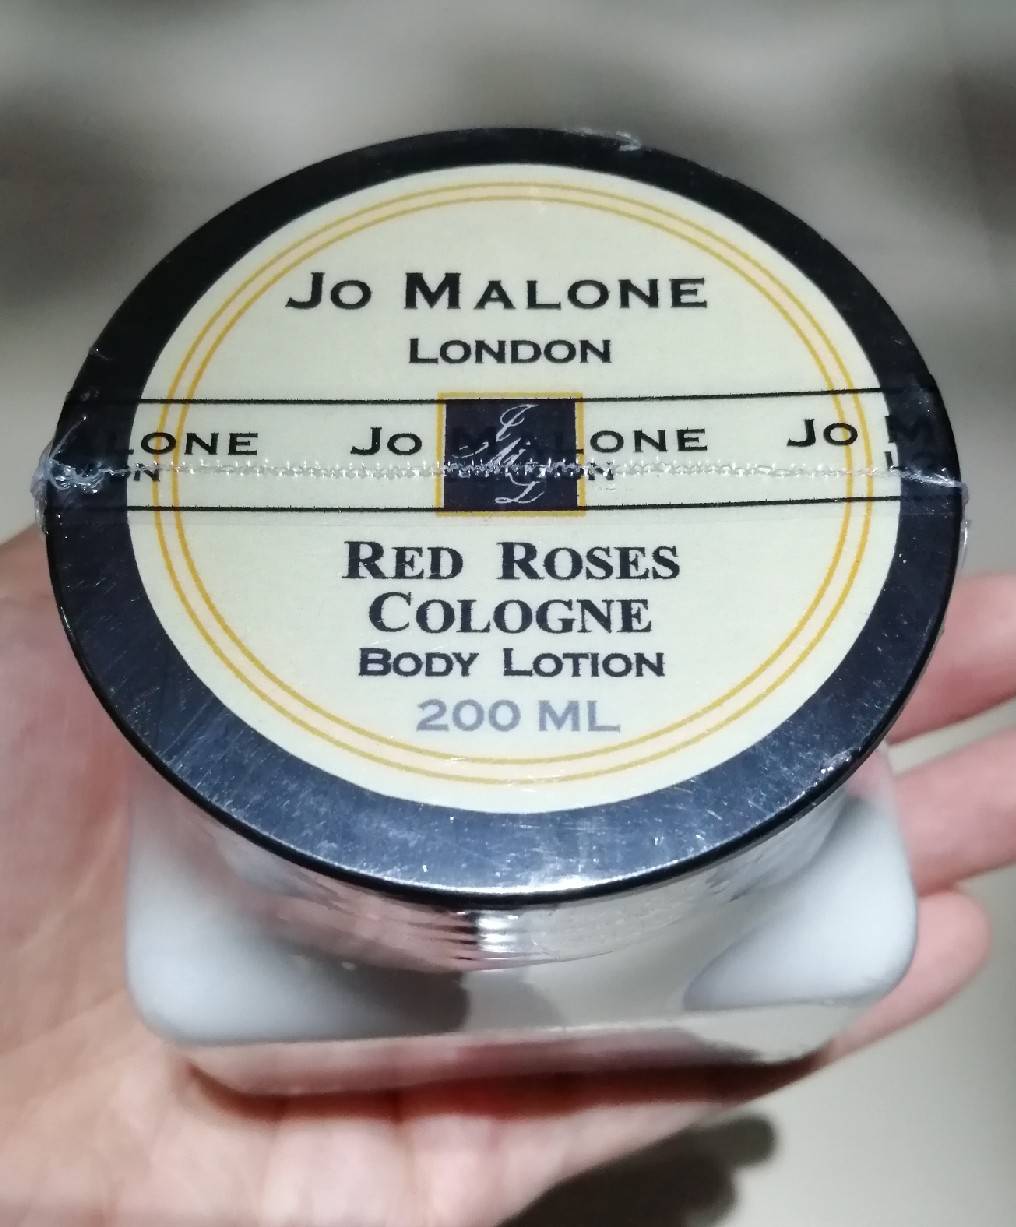 JO MALONE LONDON Red Roses cologne body lotion ขนาดใหม่เพิ่มปริมาณเป็น 250ml.ครีมน้ำหอม